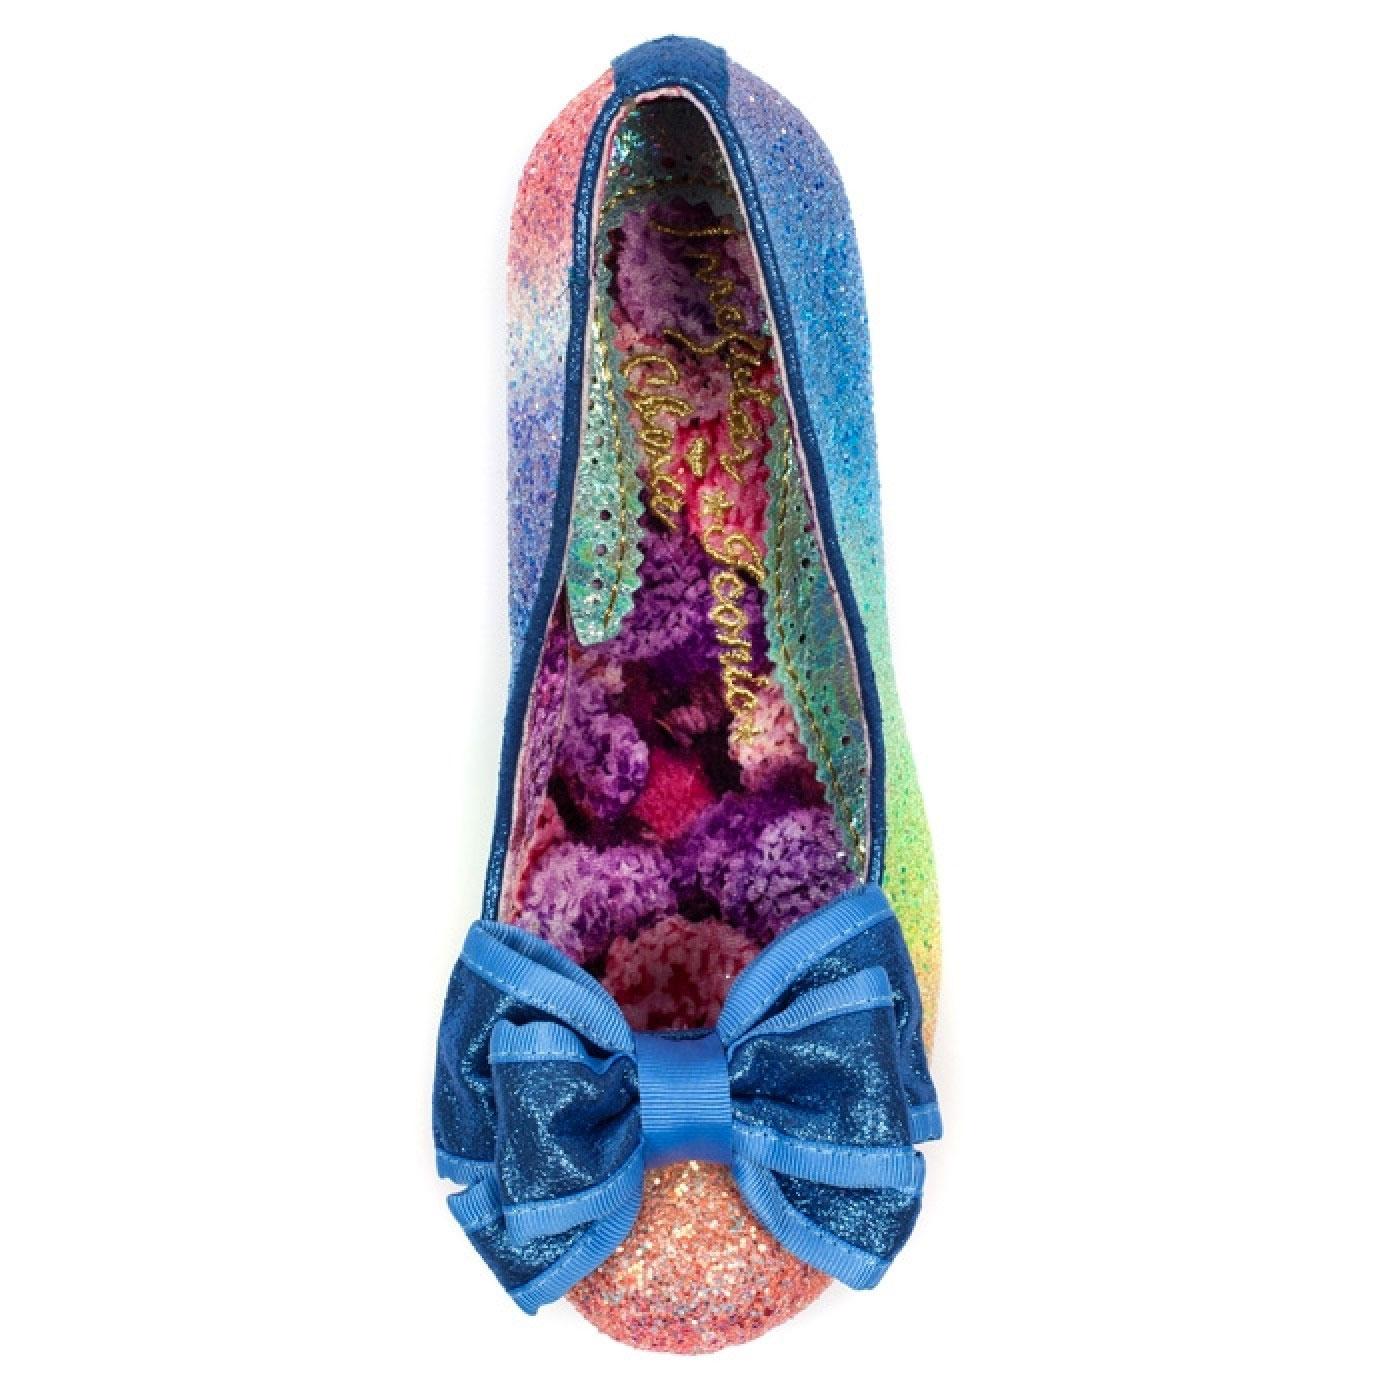 IRREGULAR CHOICE Lady Ban Joe Rainbow Glitter Shoes